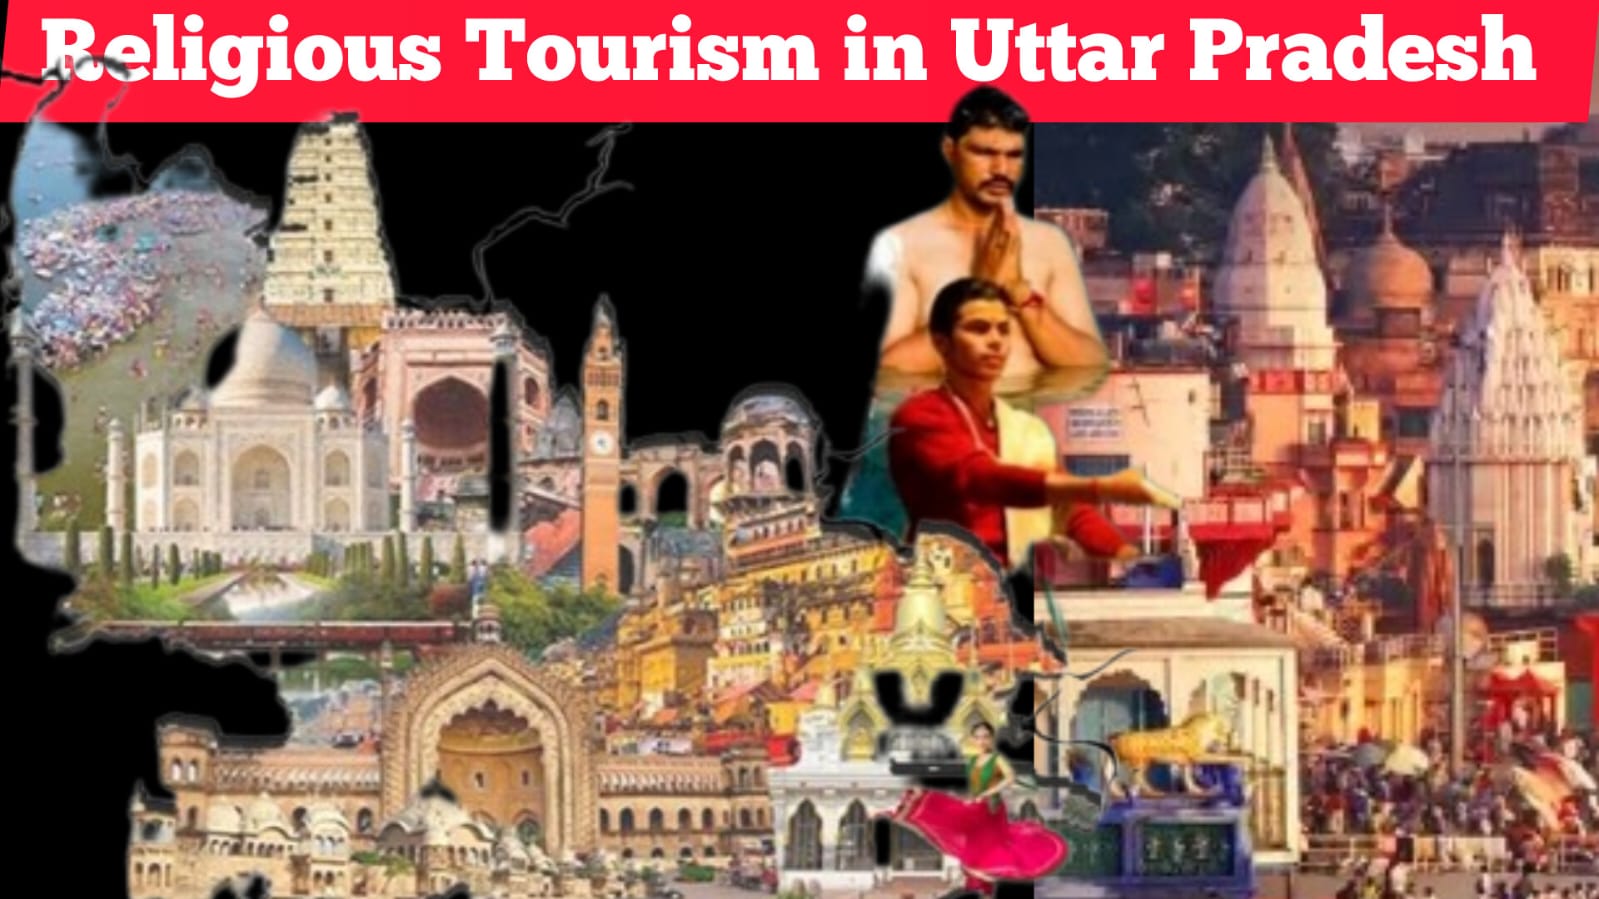 RELIGIOUS TOURISM IN UTTAR PRADESH by Lt Col GK Chaturvedi (Retd)